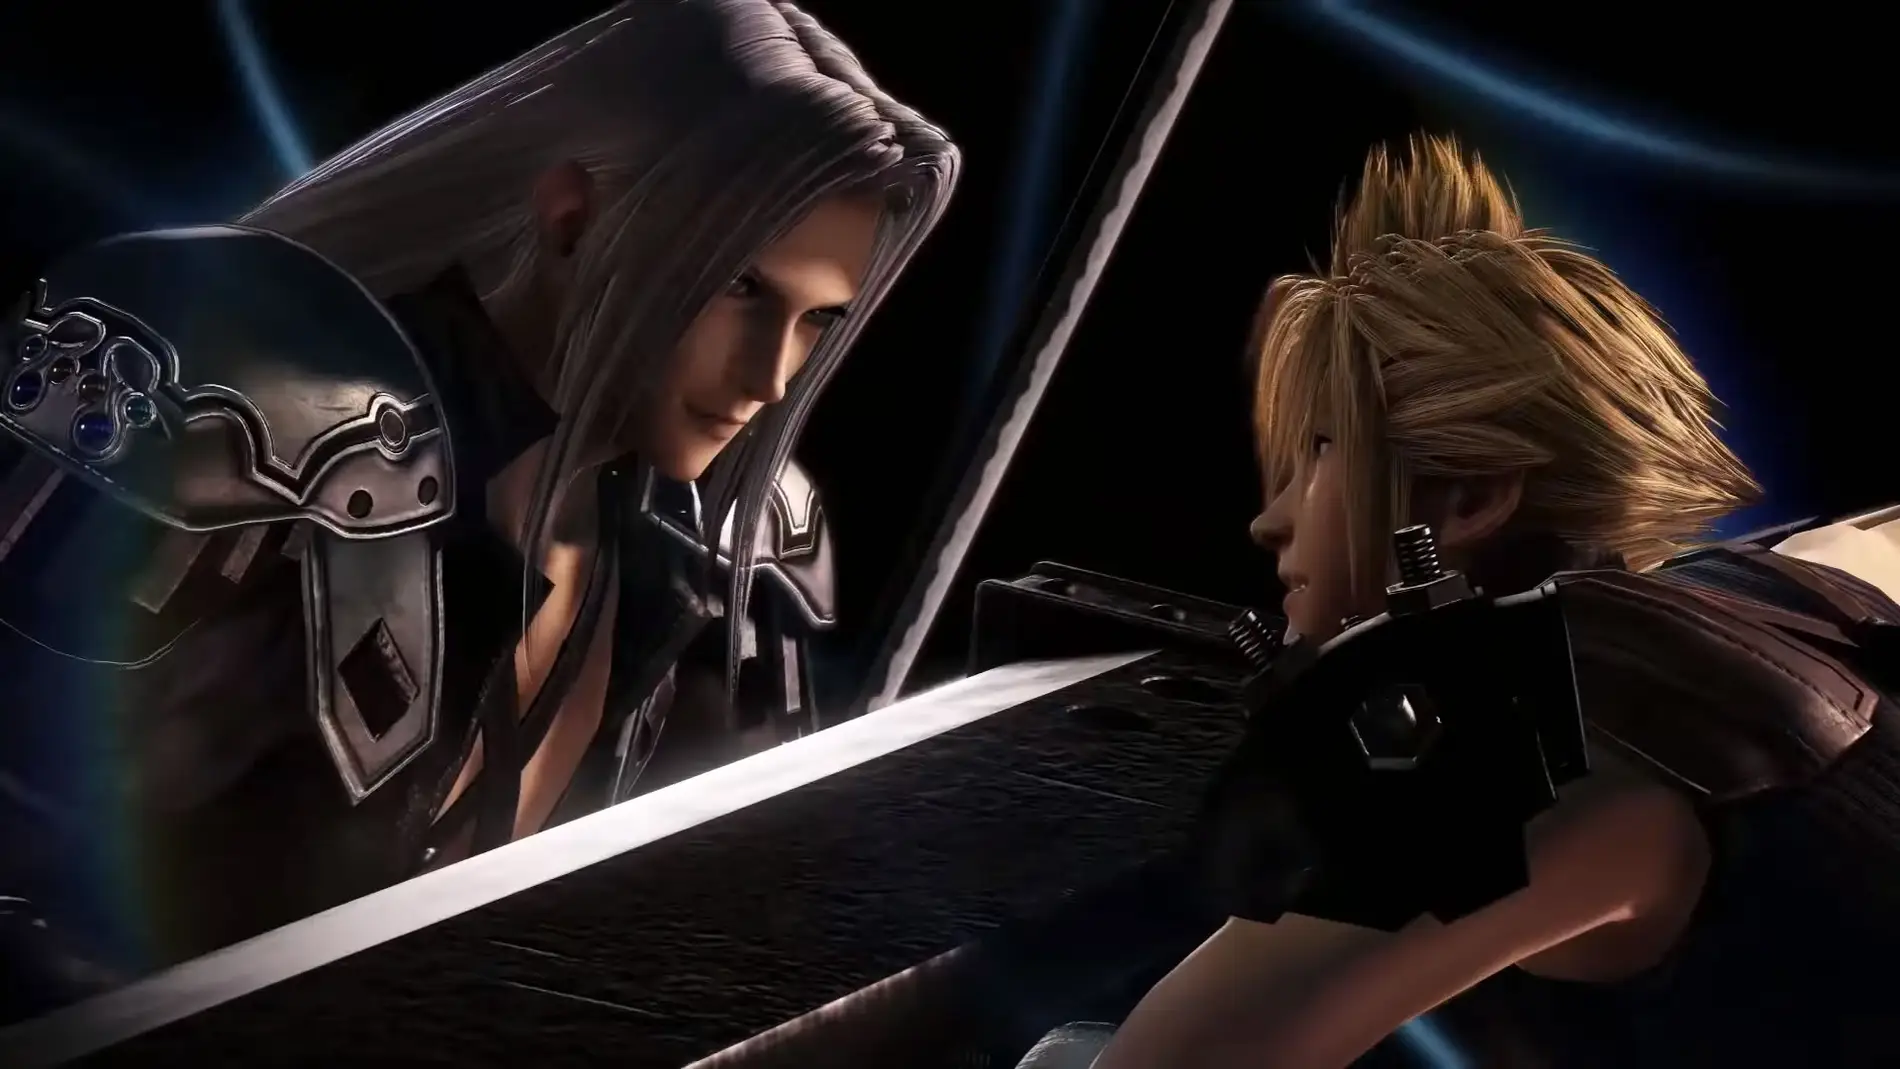 Cloud vs Sephirot en Dissidia Final Fantasy NT